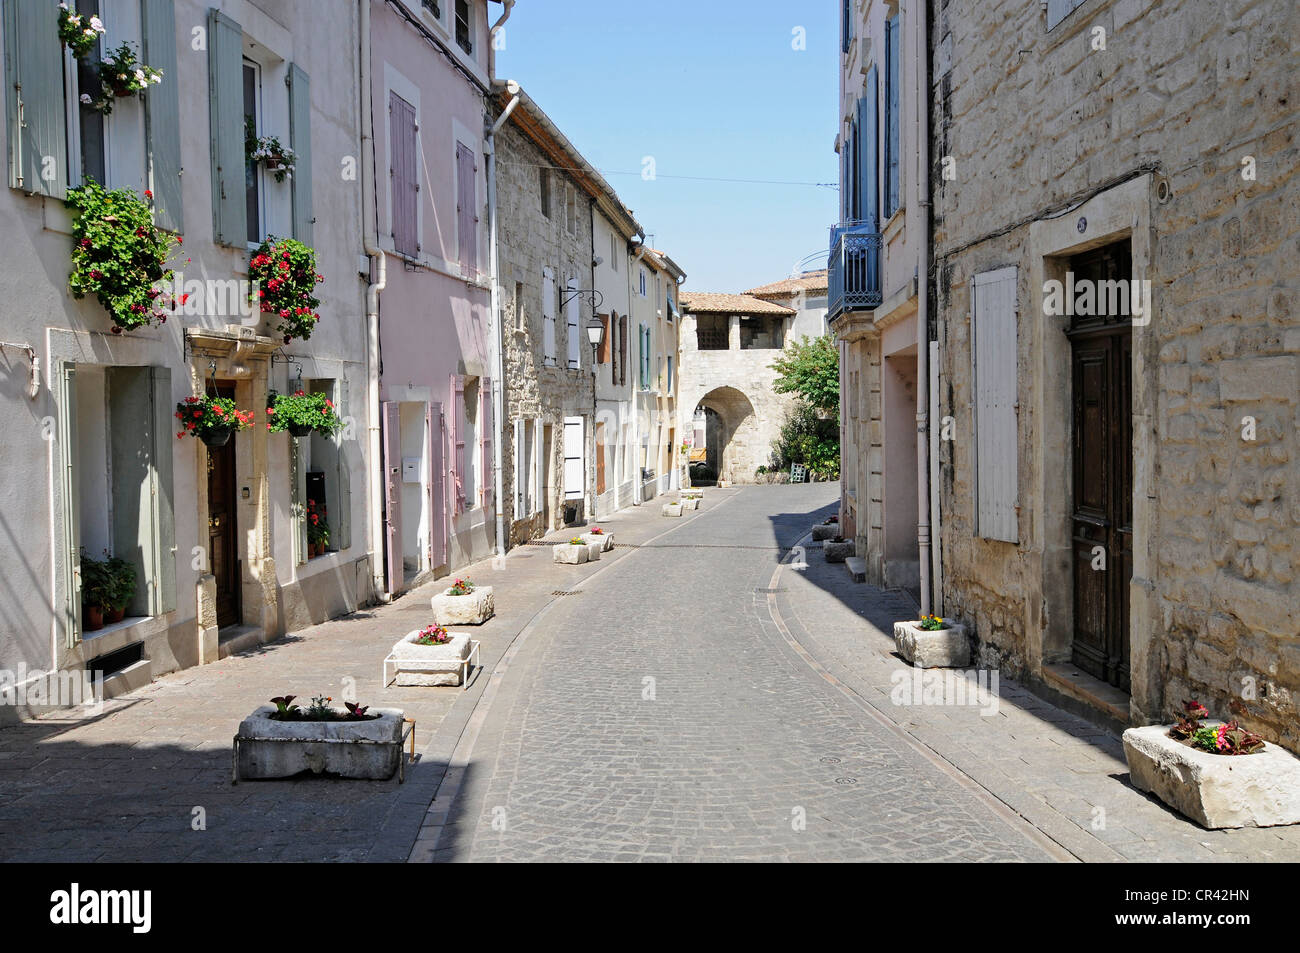 Alley, historic district, Saint Gilles du Gard, Languedoc-Roussillon region, France, Europe Stock Photo